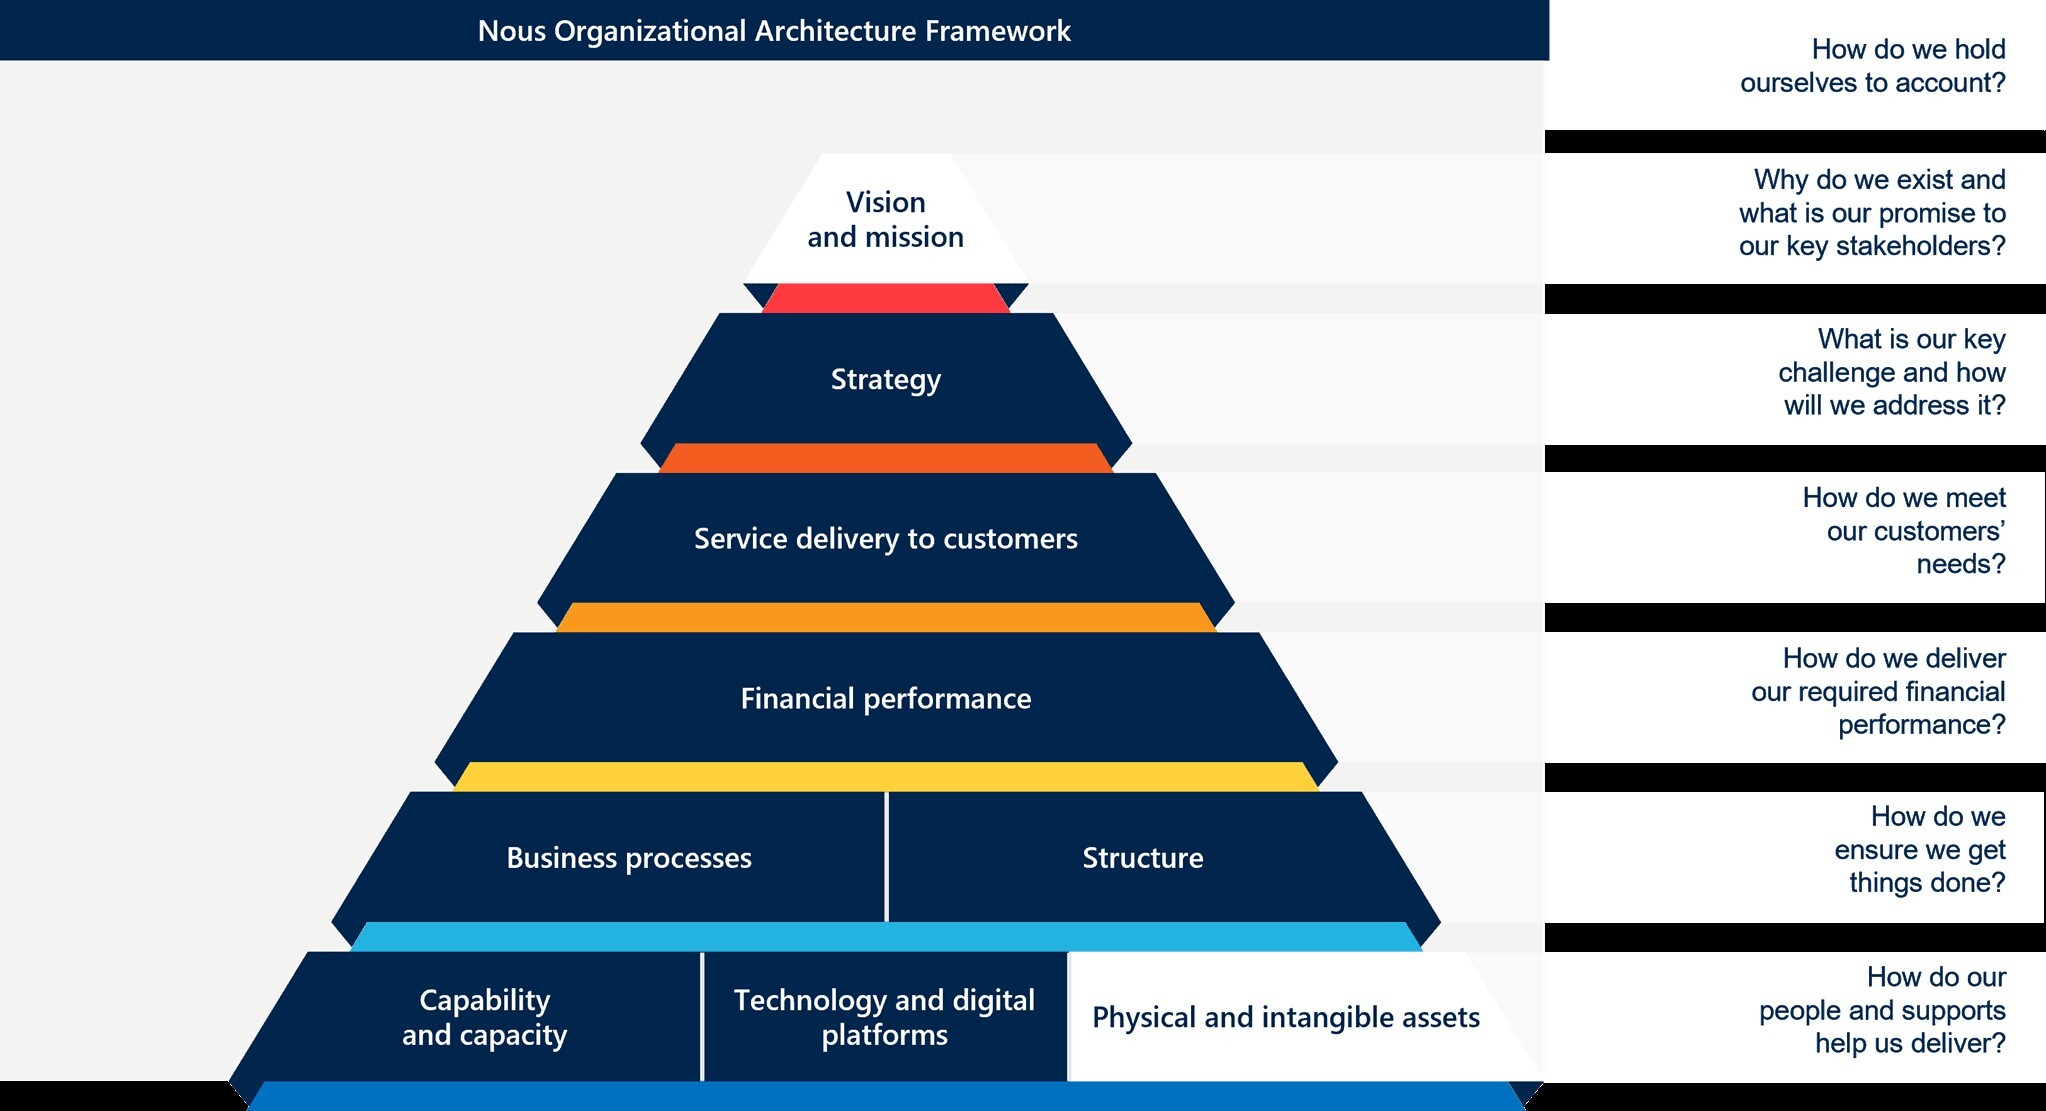 Visual of Nous' Organizational Architecture Framework